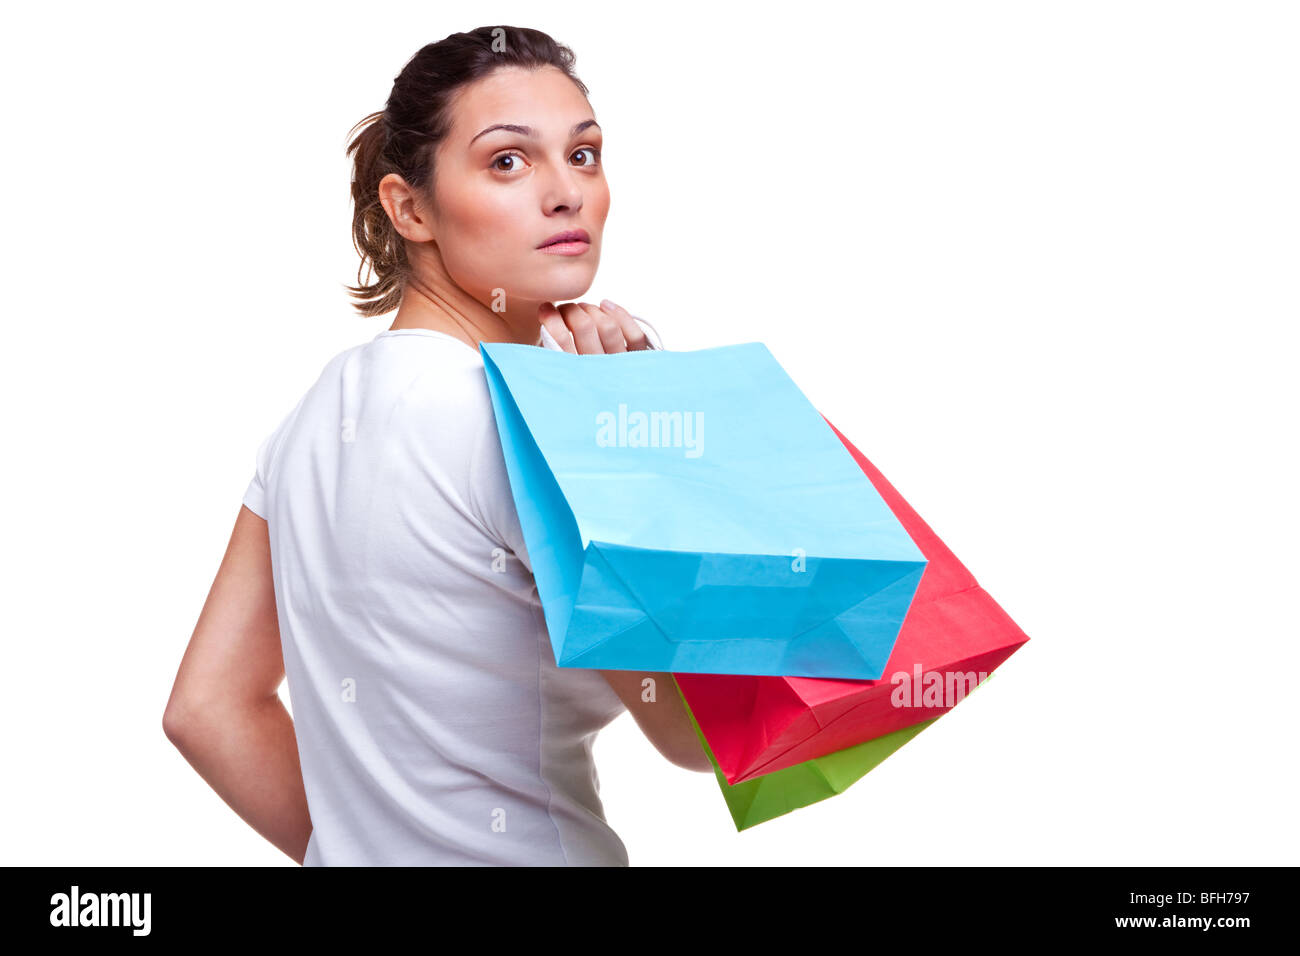 Young woman carrying shopping bags Stock Photo